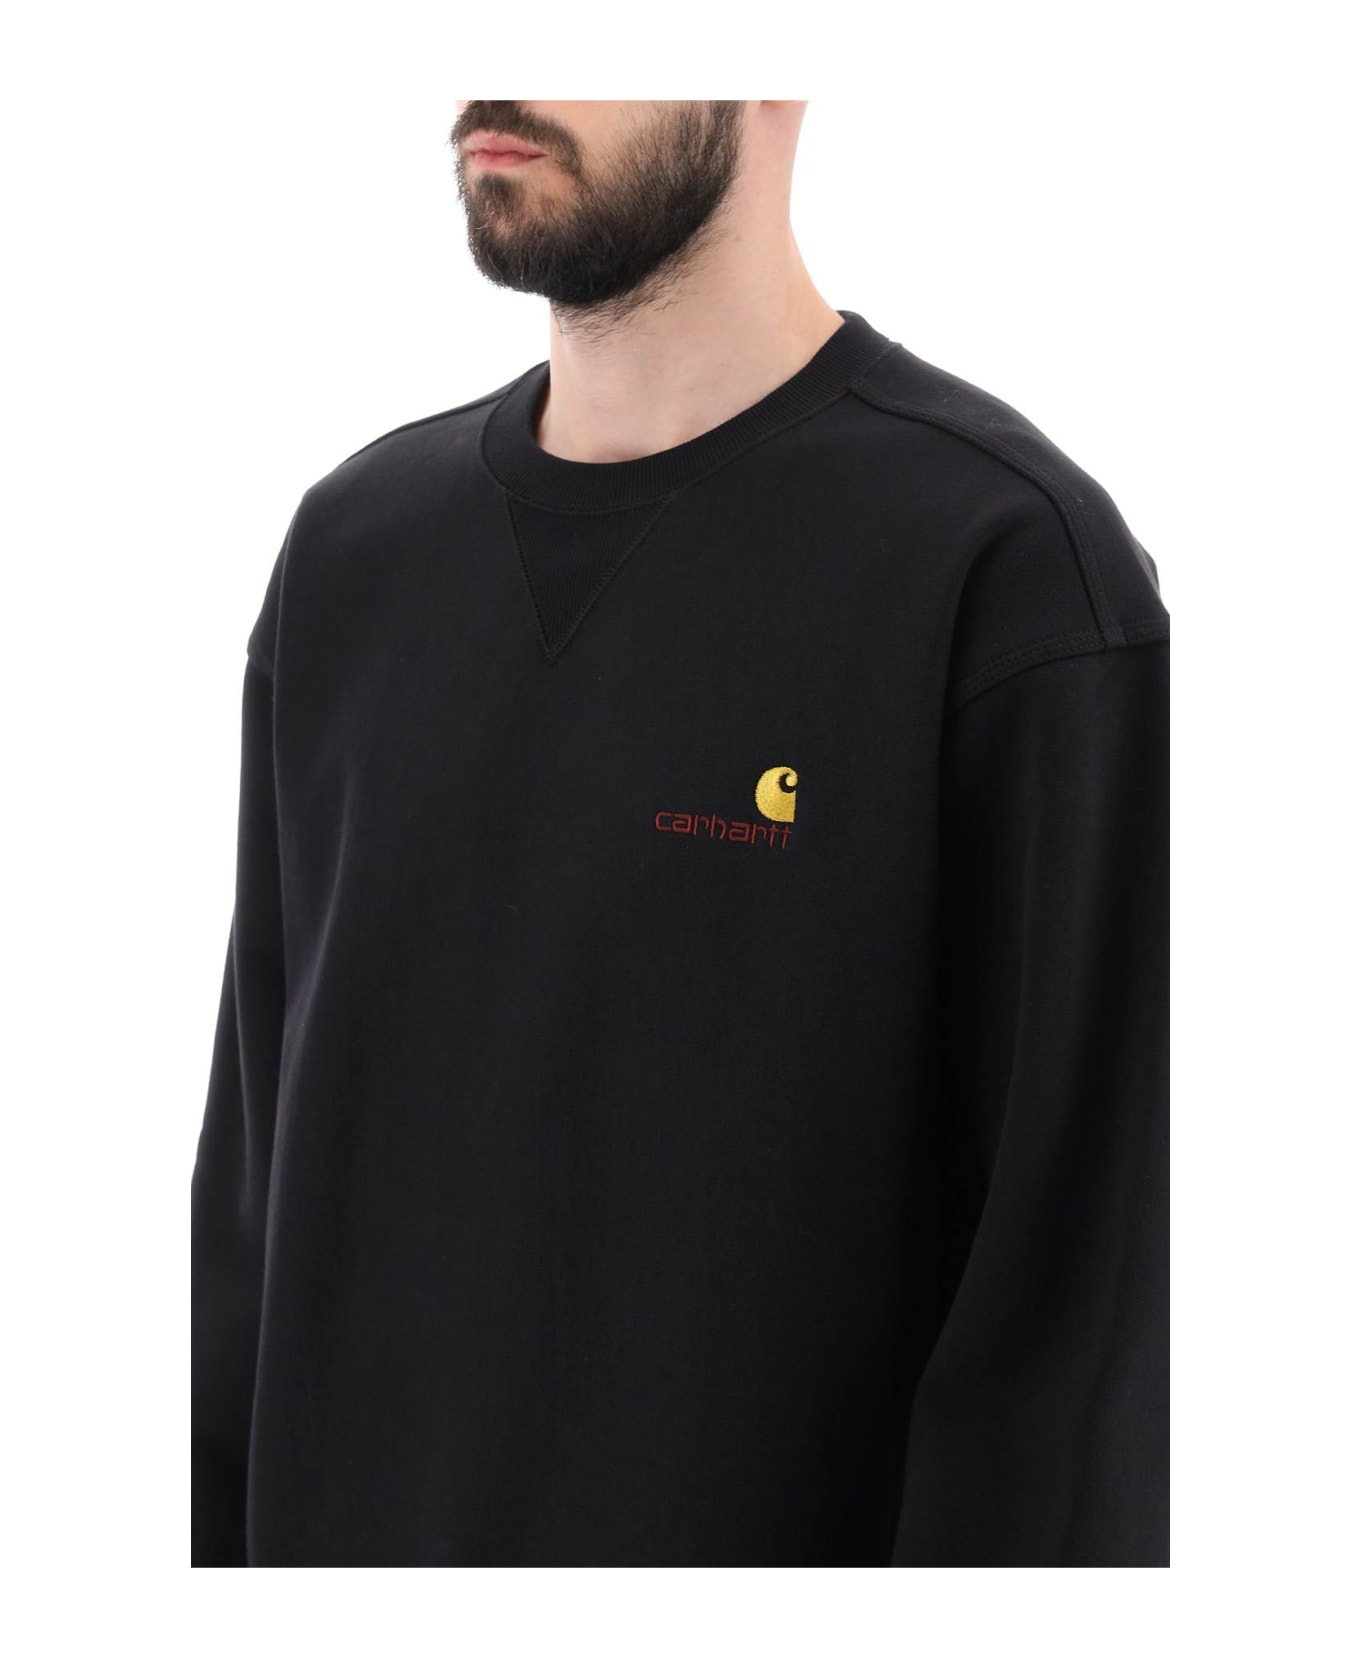 Carhartt Sweatshirt With Logo - BLACK